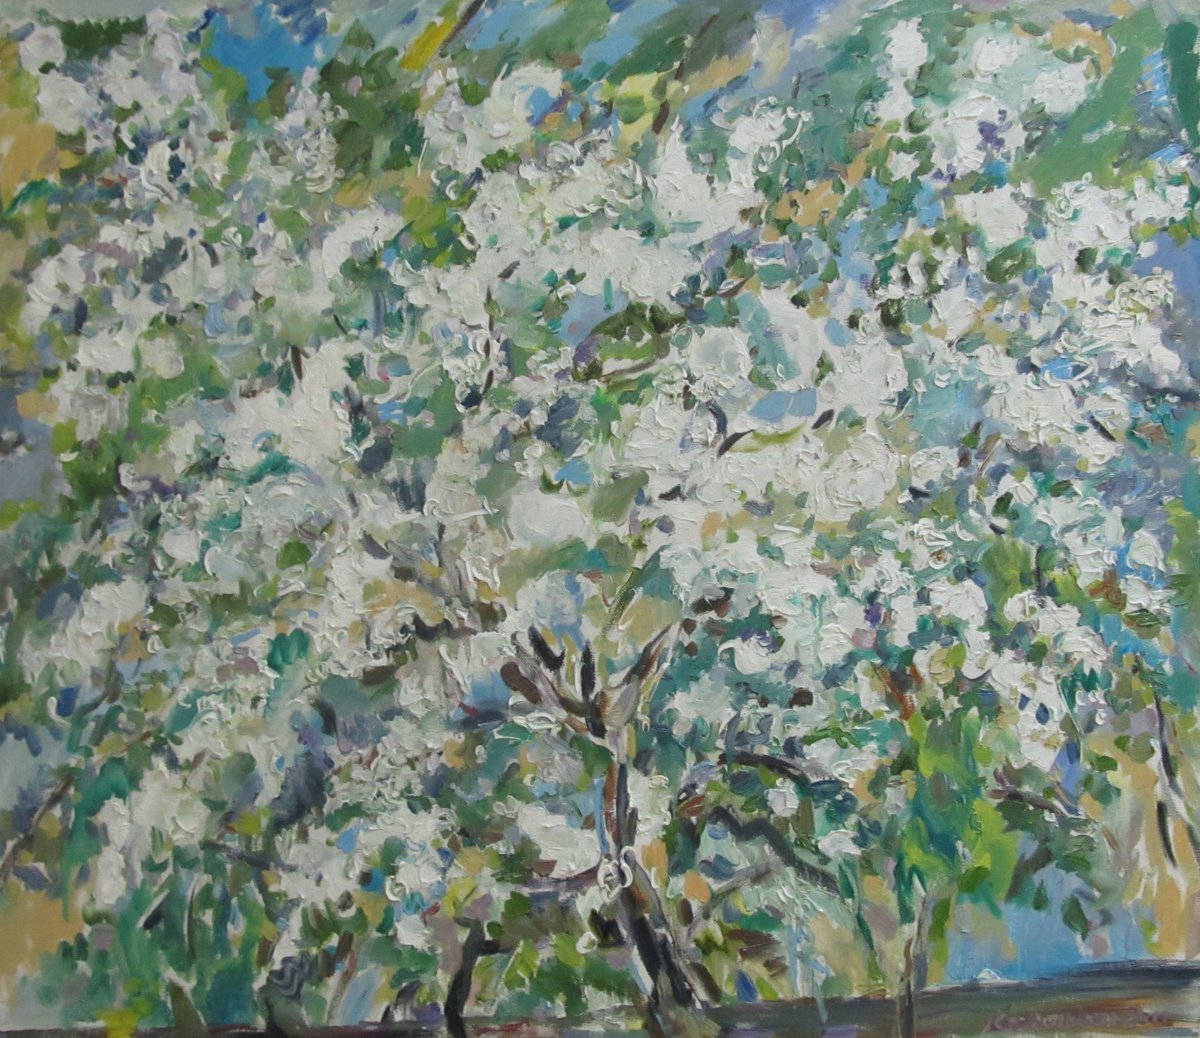 FLOWERING BUSH. APPLE TREE - floral art, landscape, blooming plant, original oil painting by Karakhan